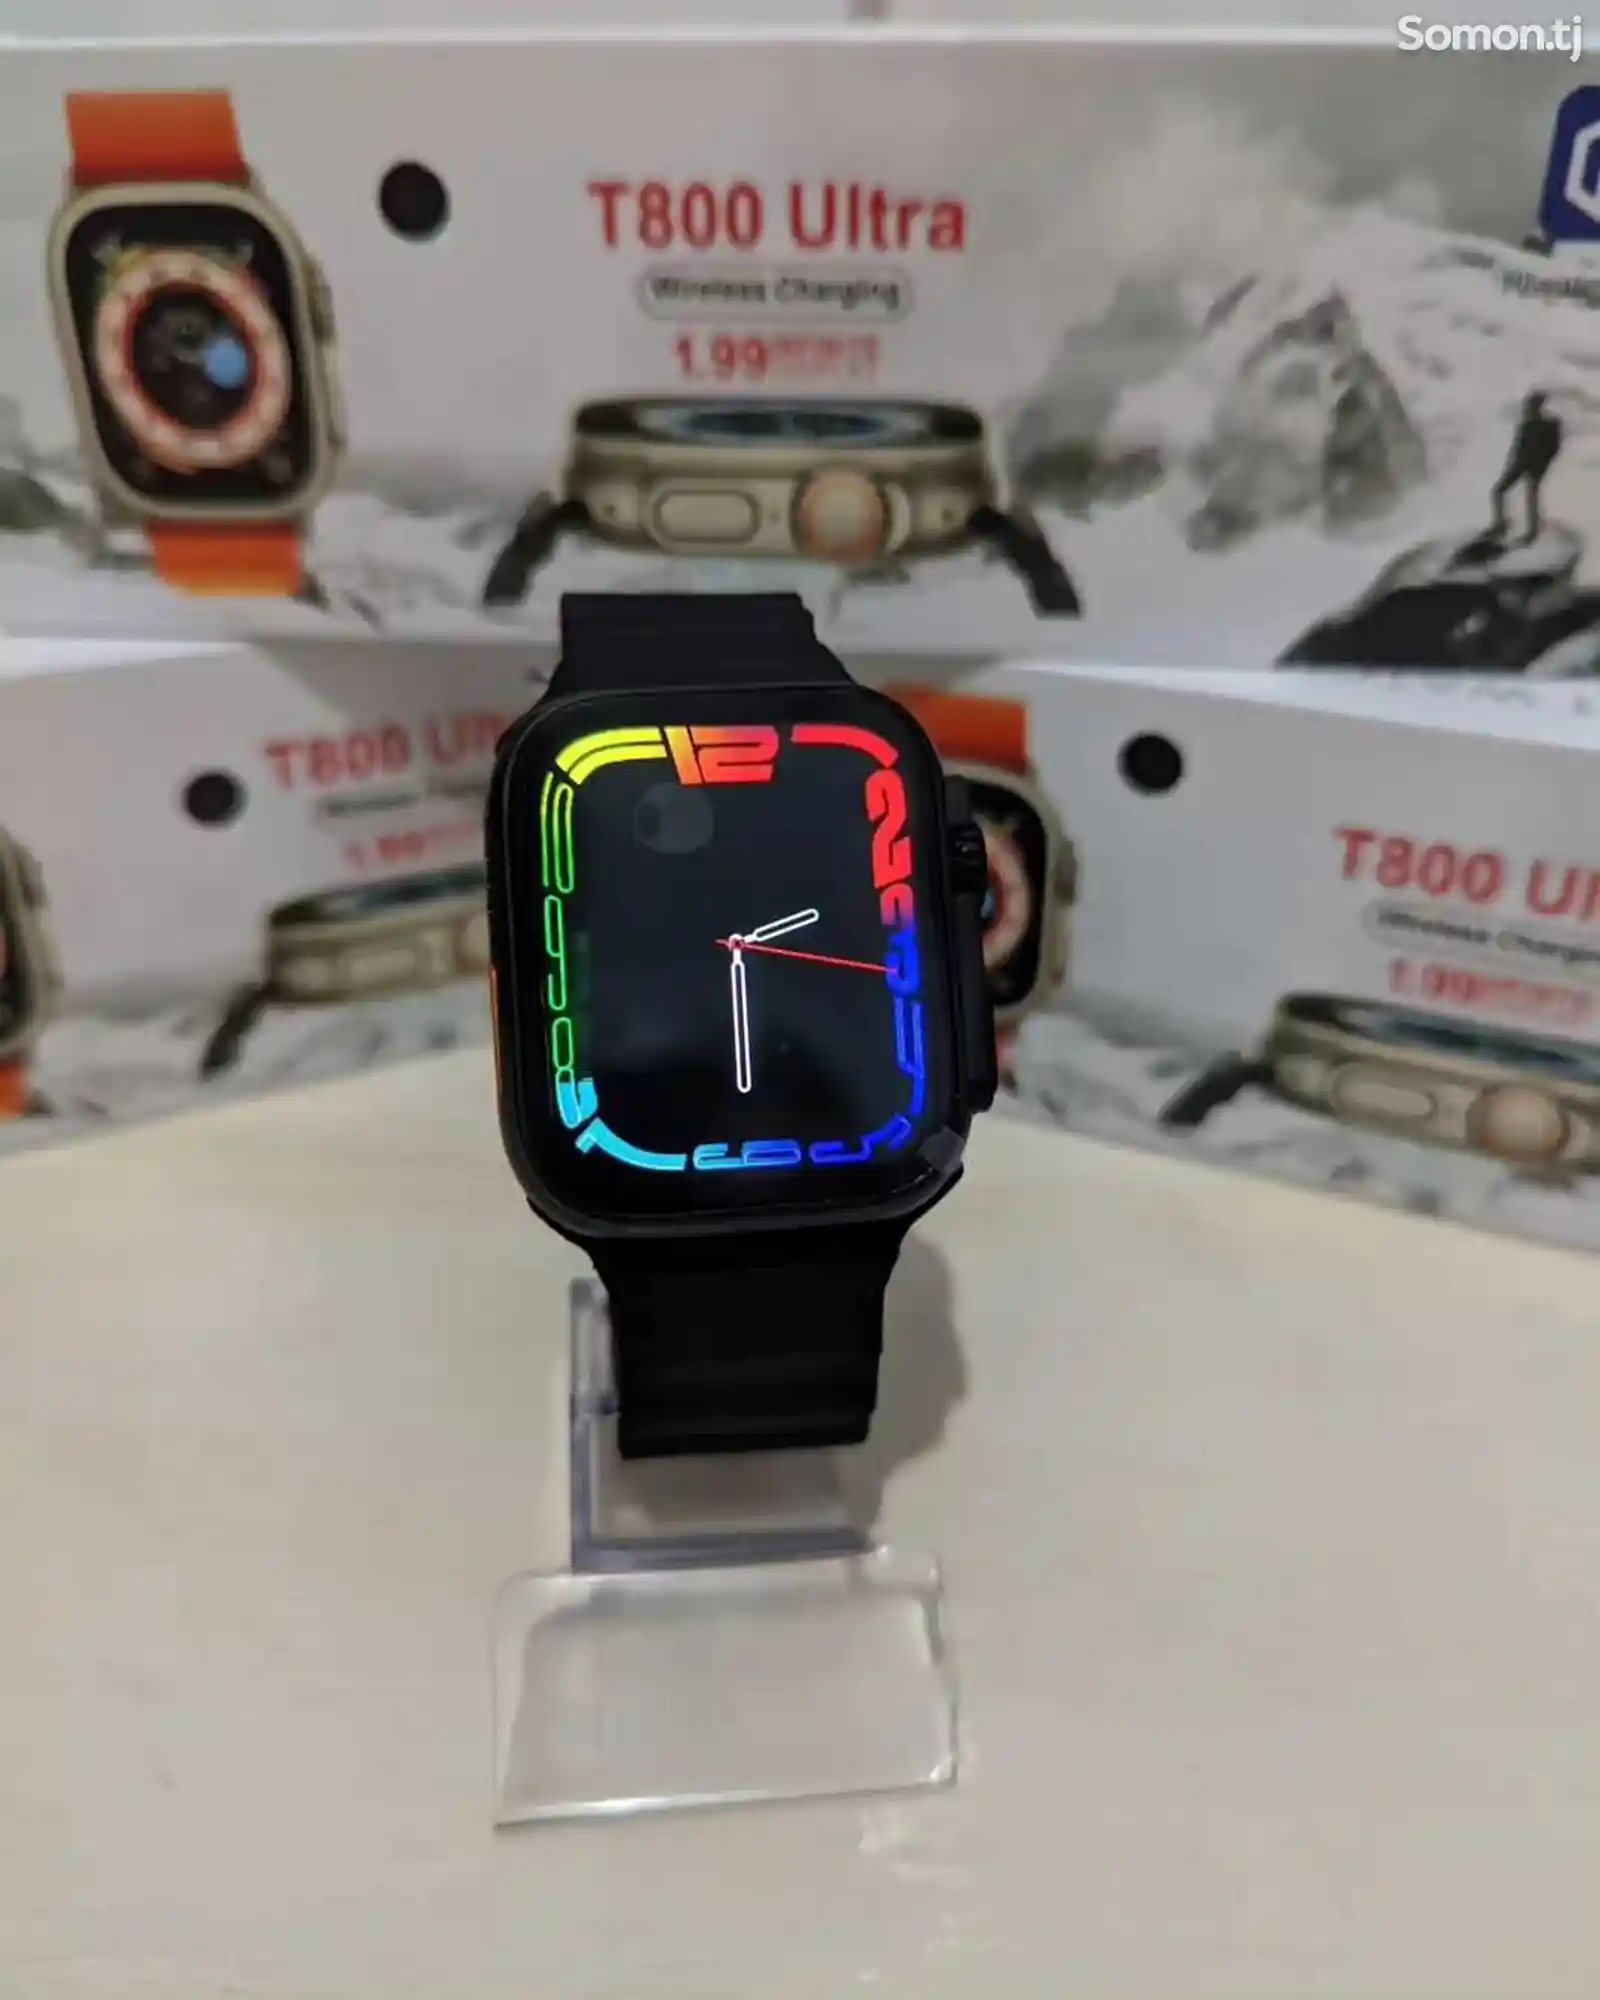 Смарт часы Apple Watch T800 ultra-1